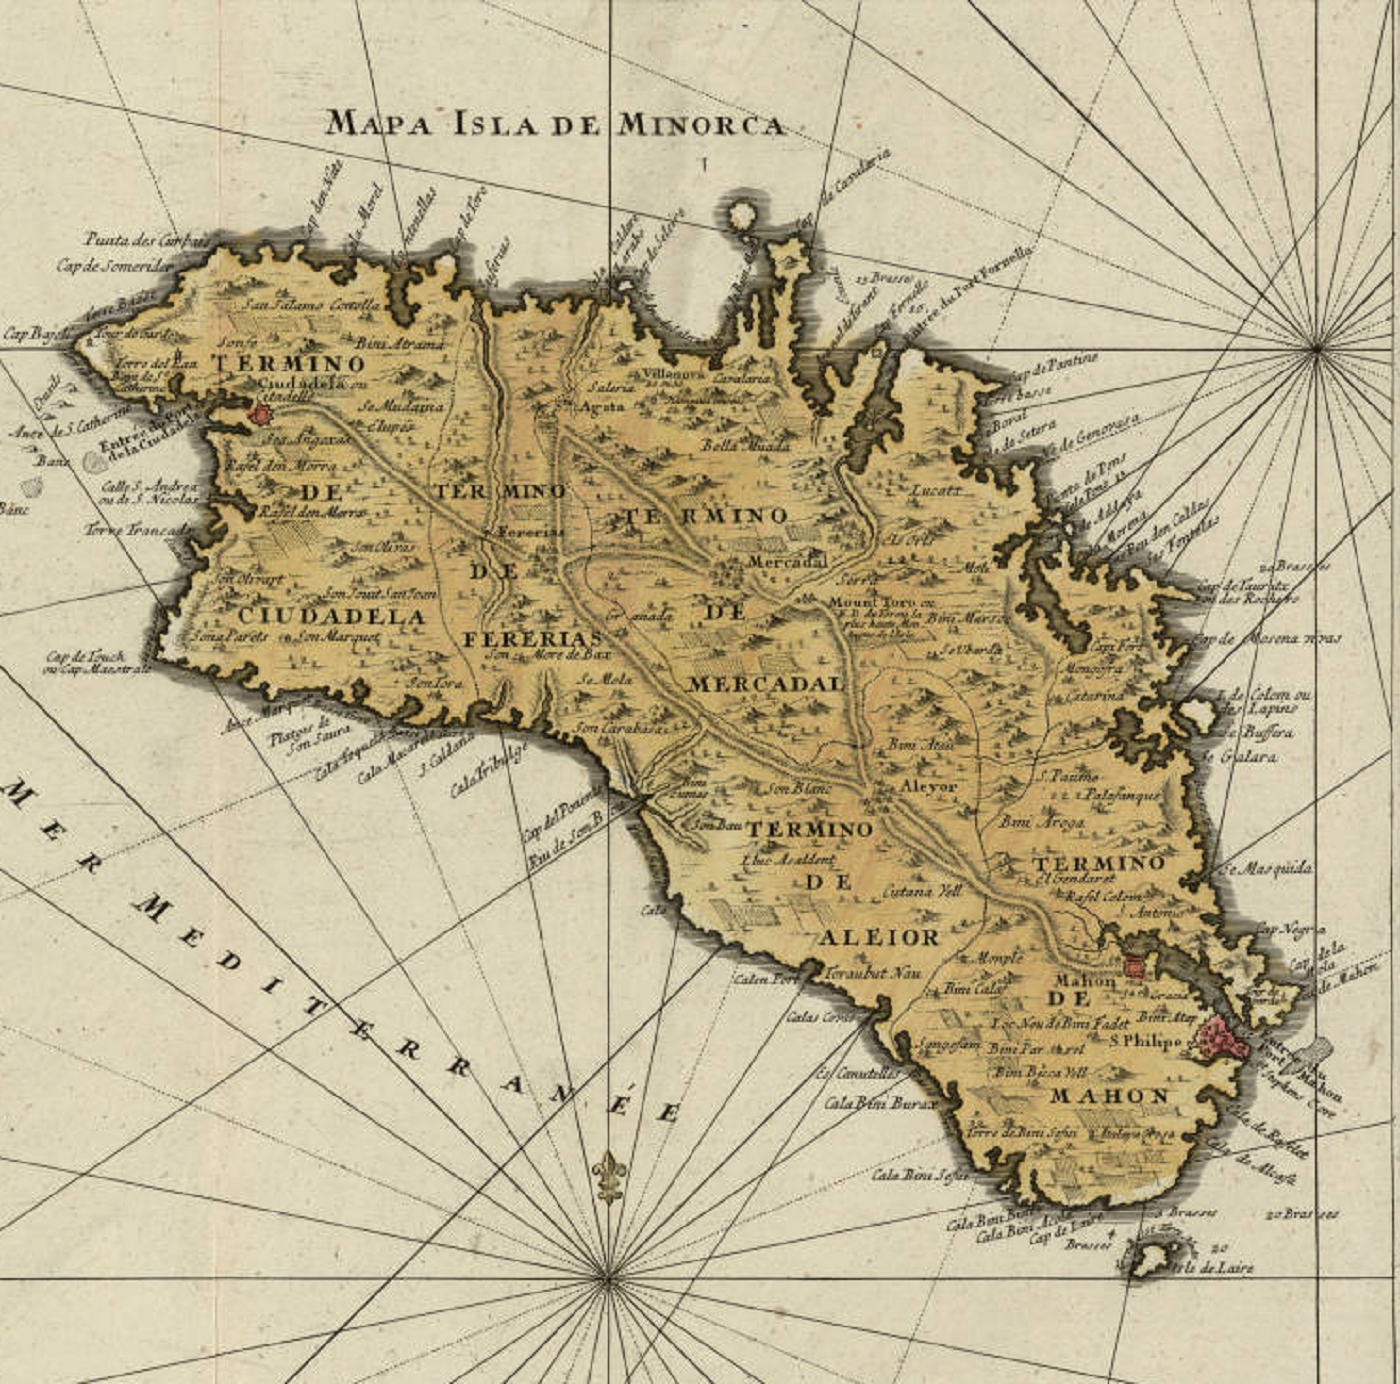 La guerra de la independència nord-americana es trasllada a Menorca